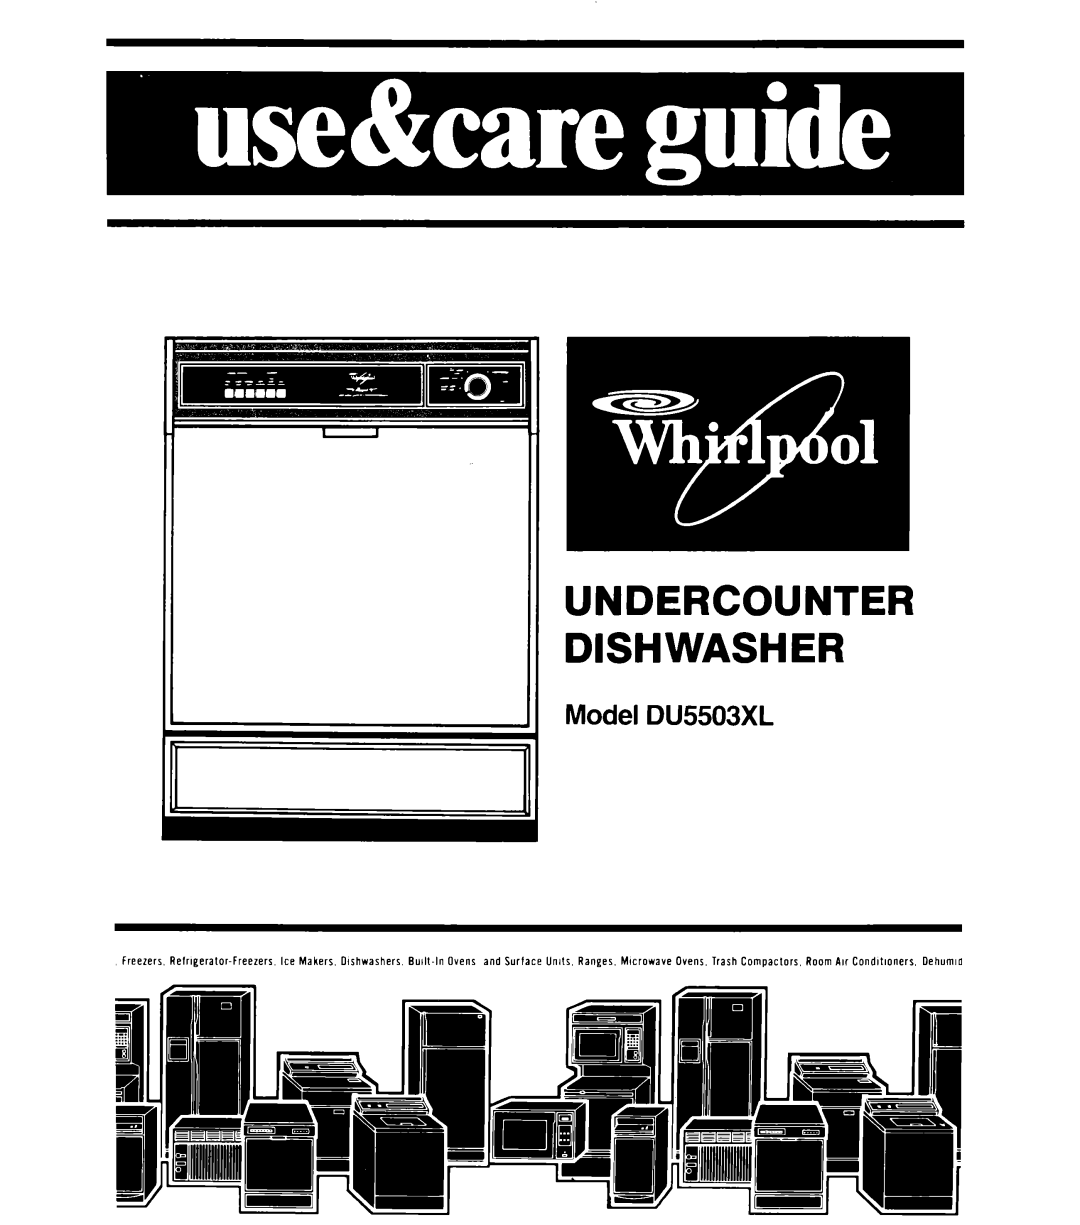 Whirlpool manual Undercounter Dishwasher, Model DU5503XL 